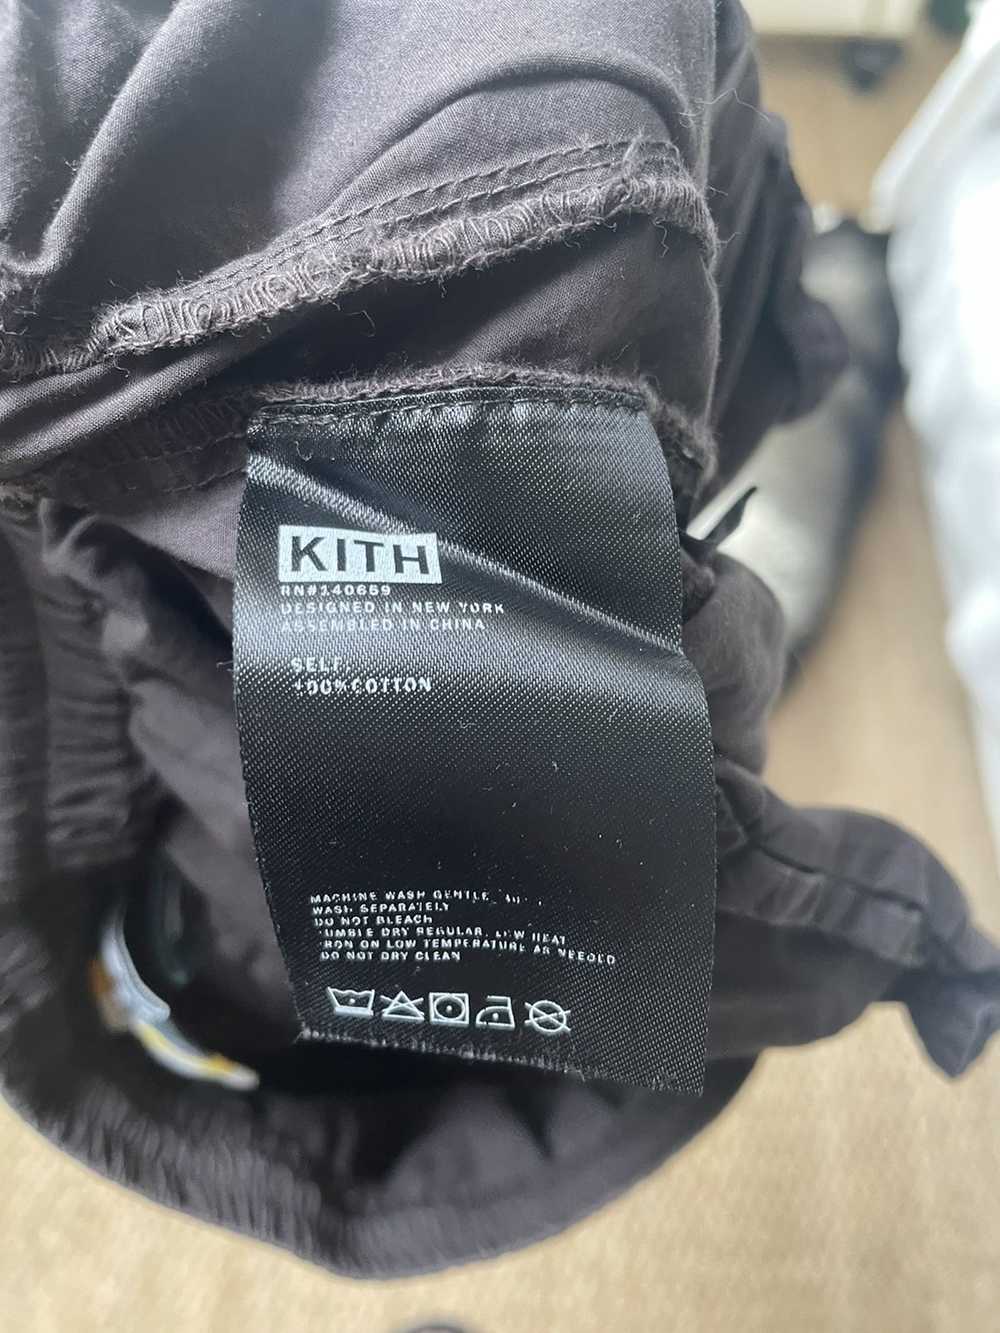 Kith Kith cargo shorts - image 4